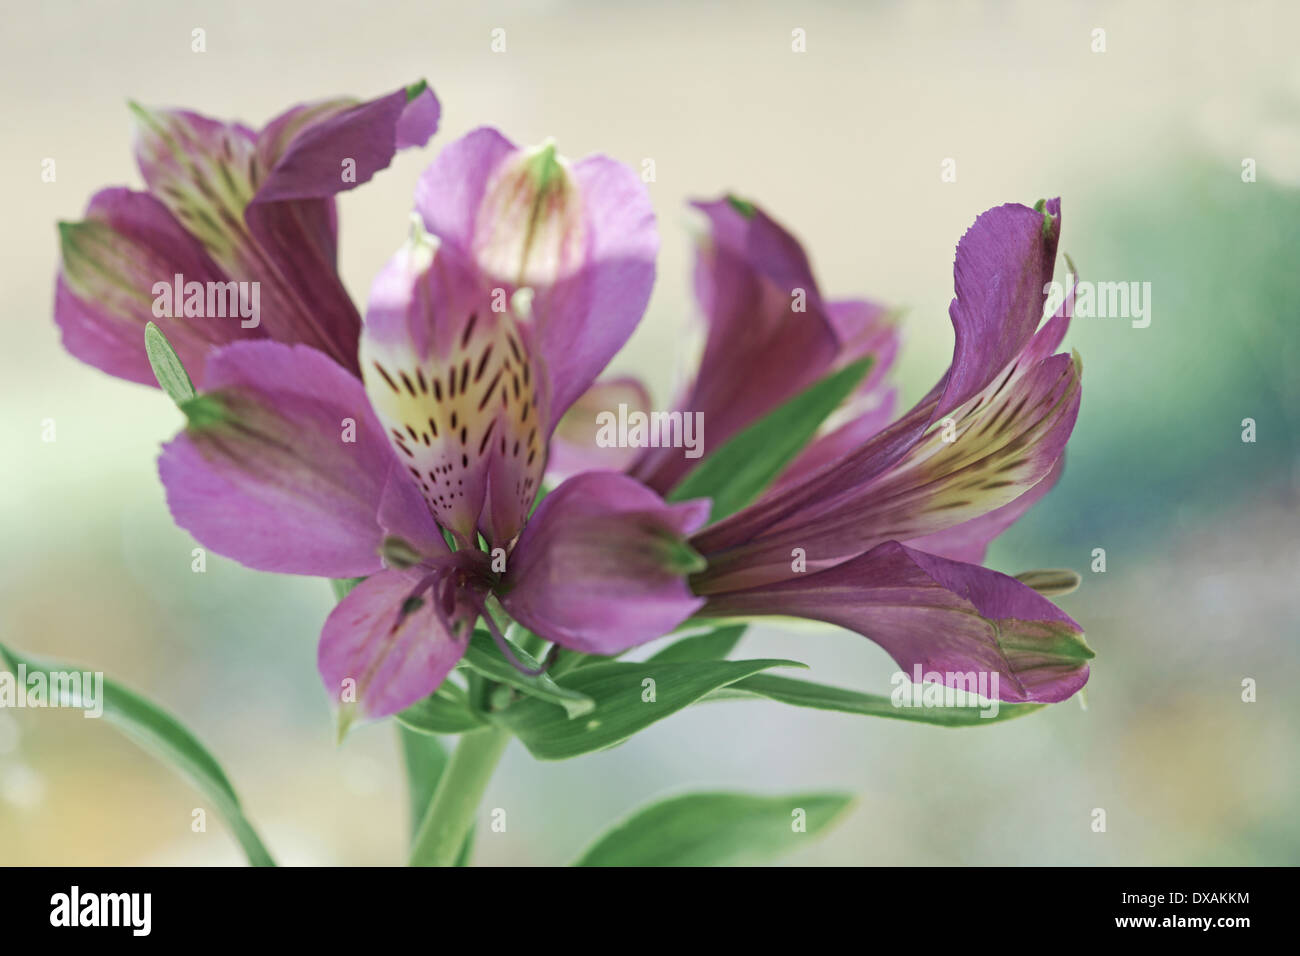 Alstroemeria 'Perfect blue', flowers against soft focus background. Stock Photo